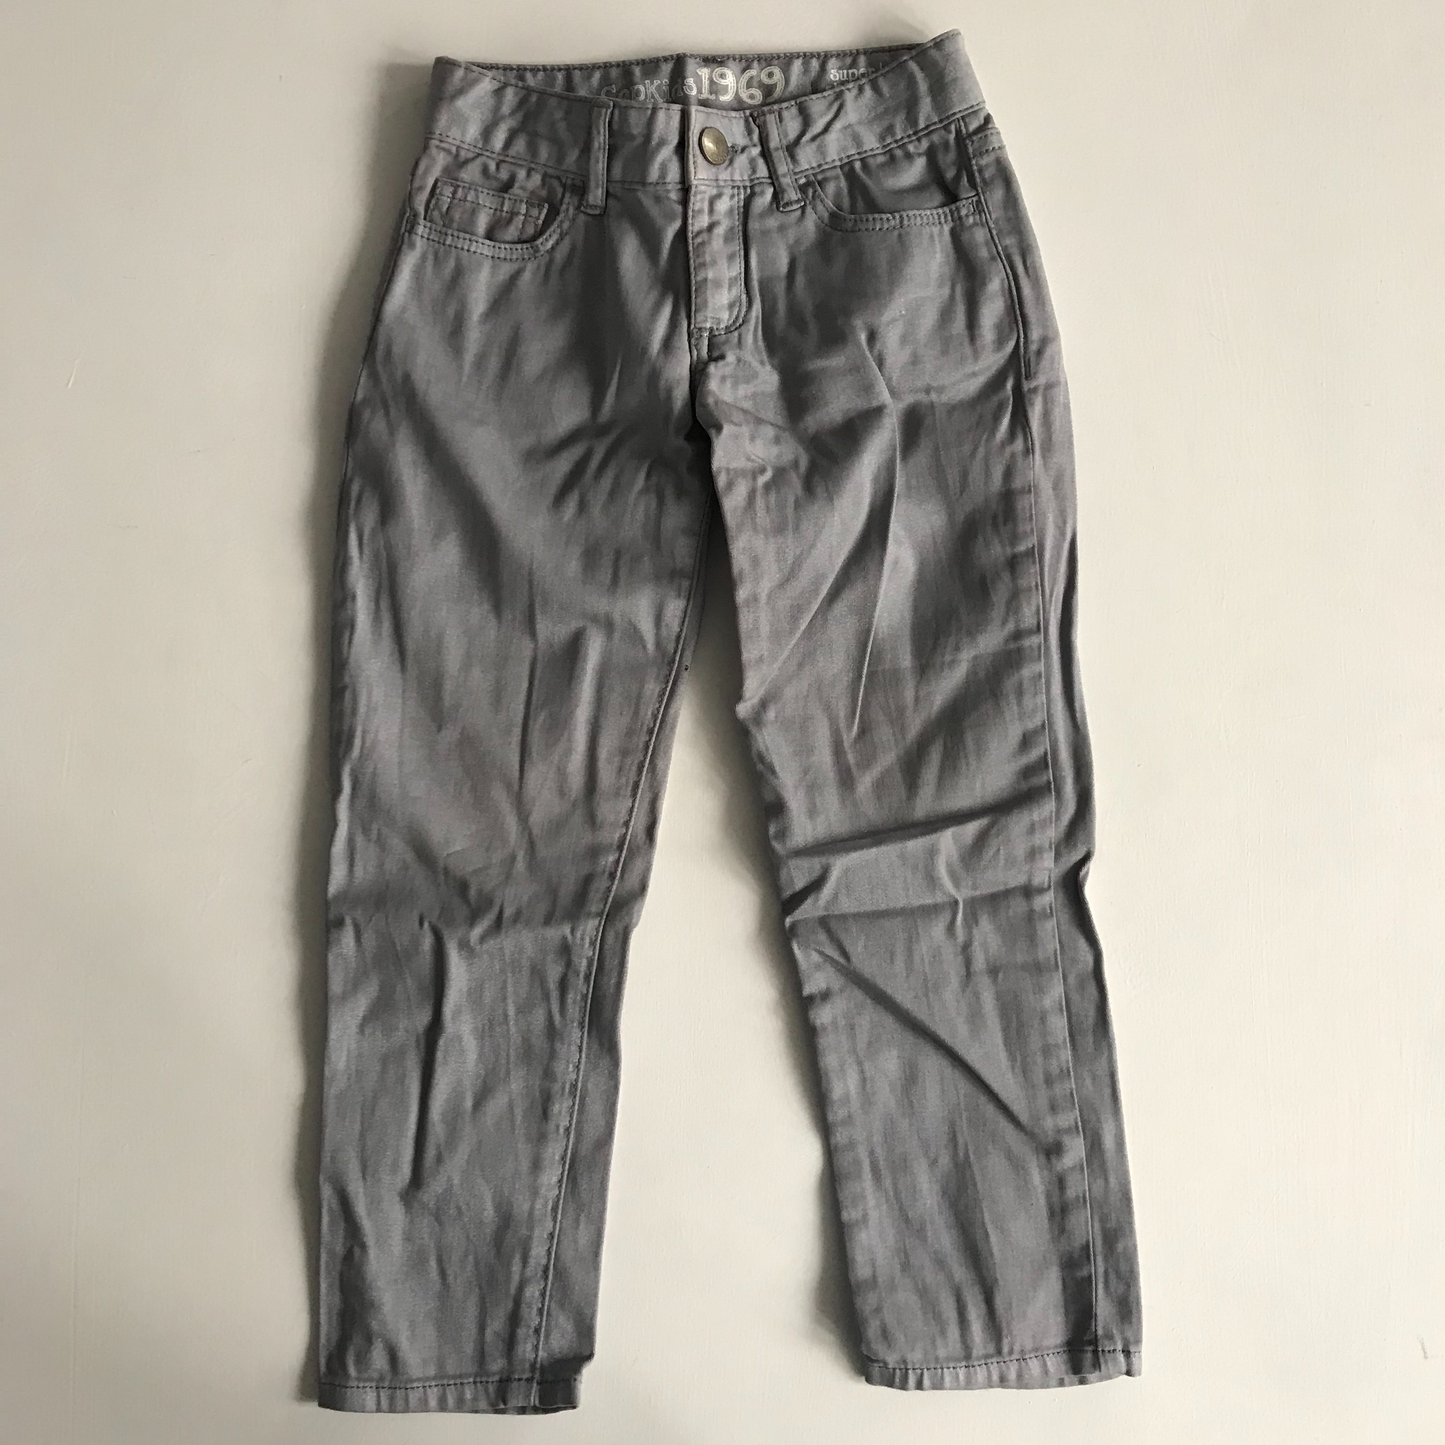 Trousers - GAP Denim Style - Age 5